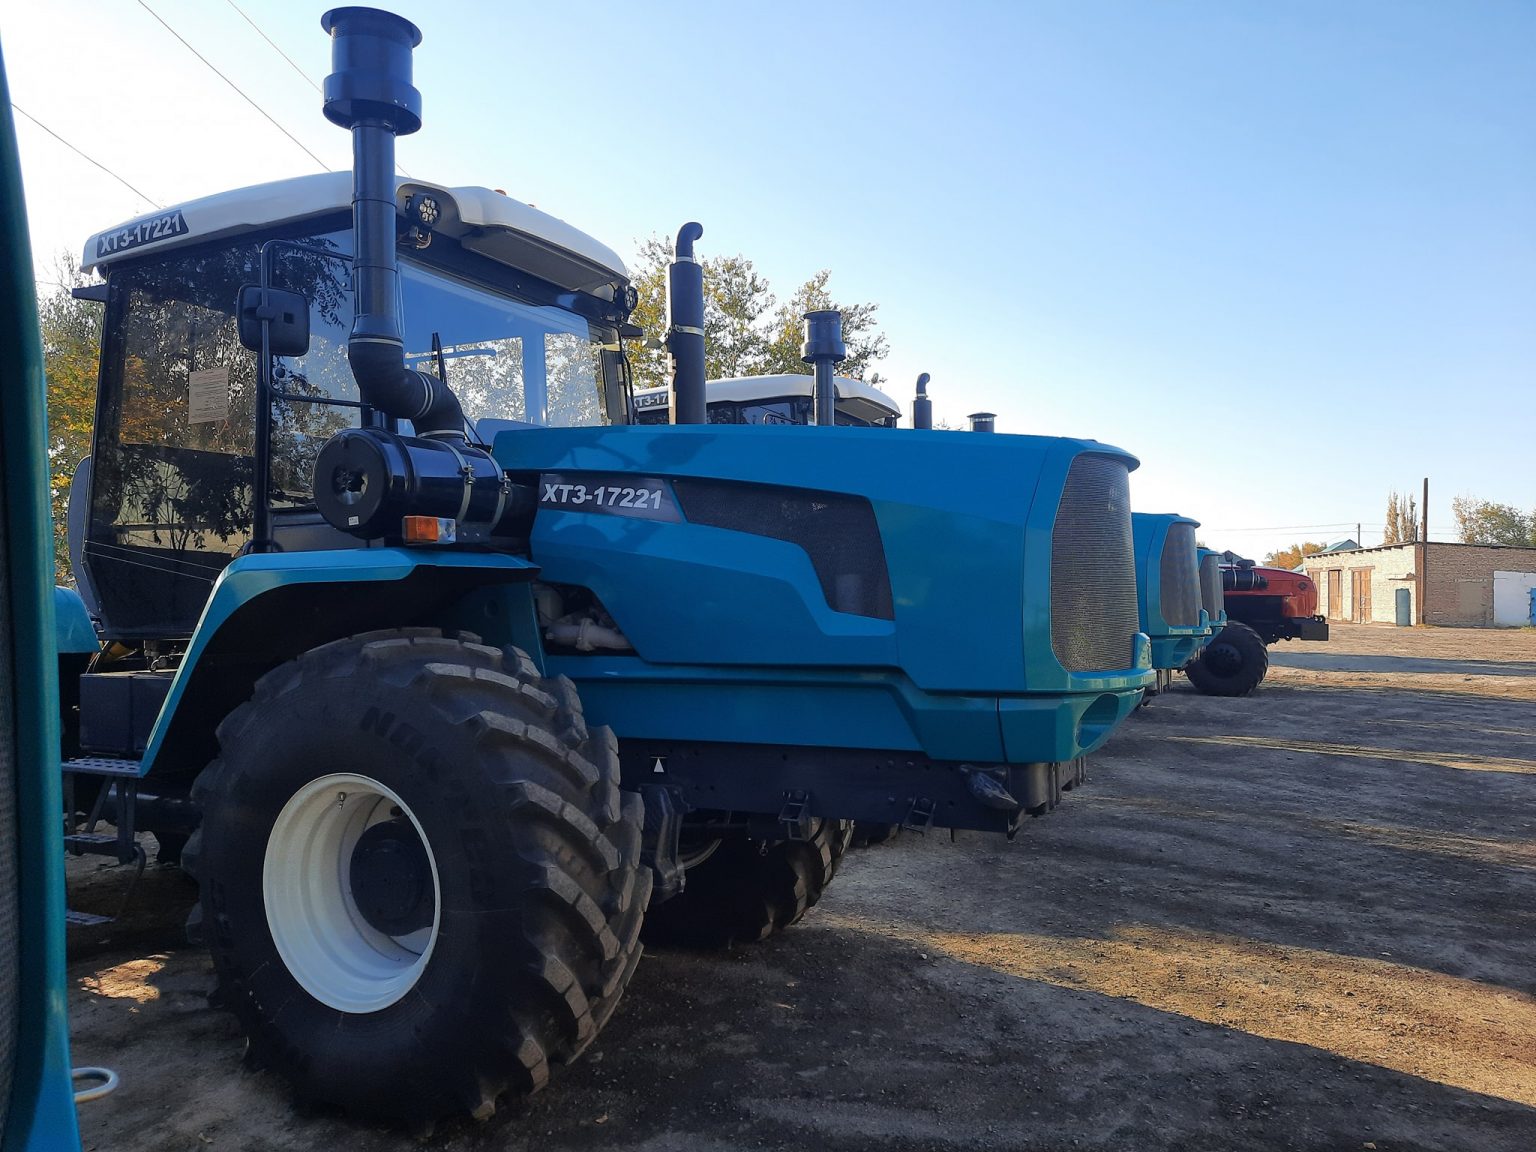 traktorr 1536x1152 1